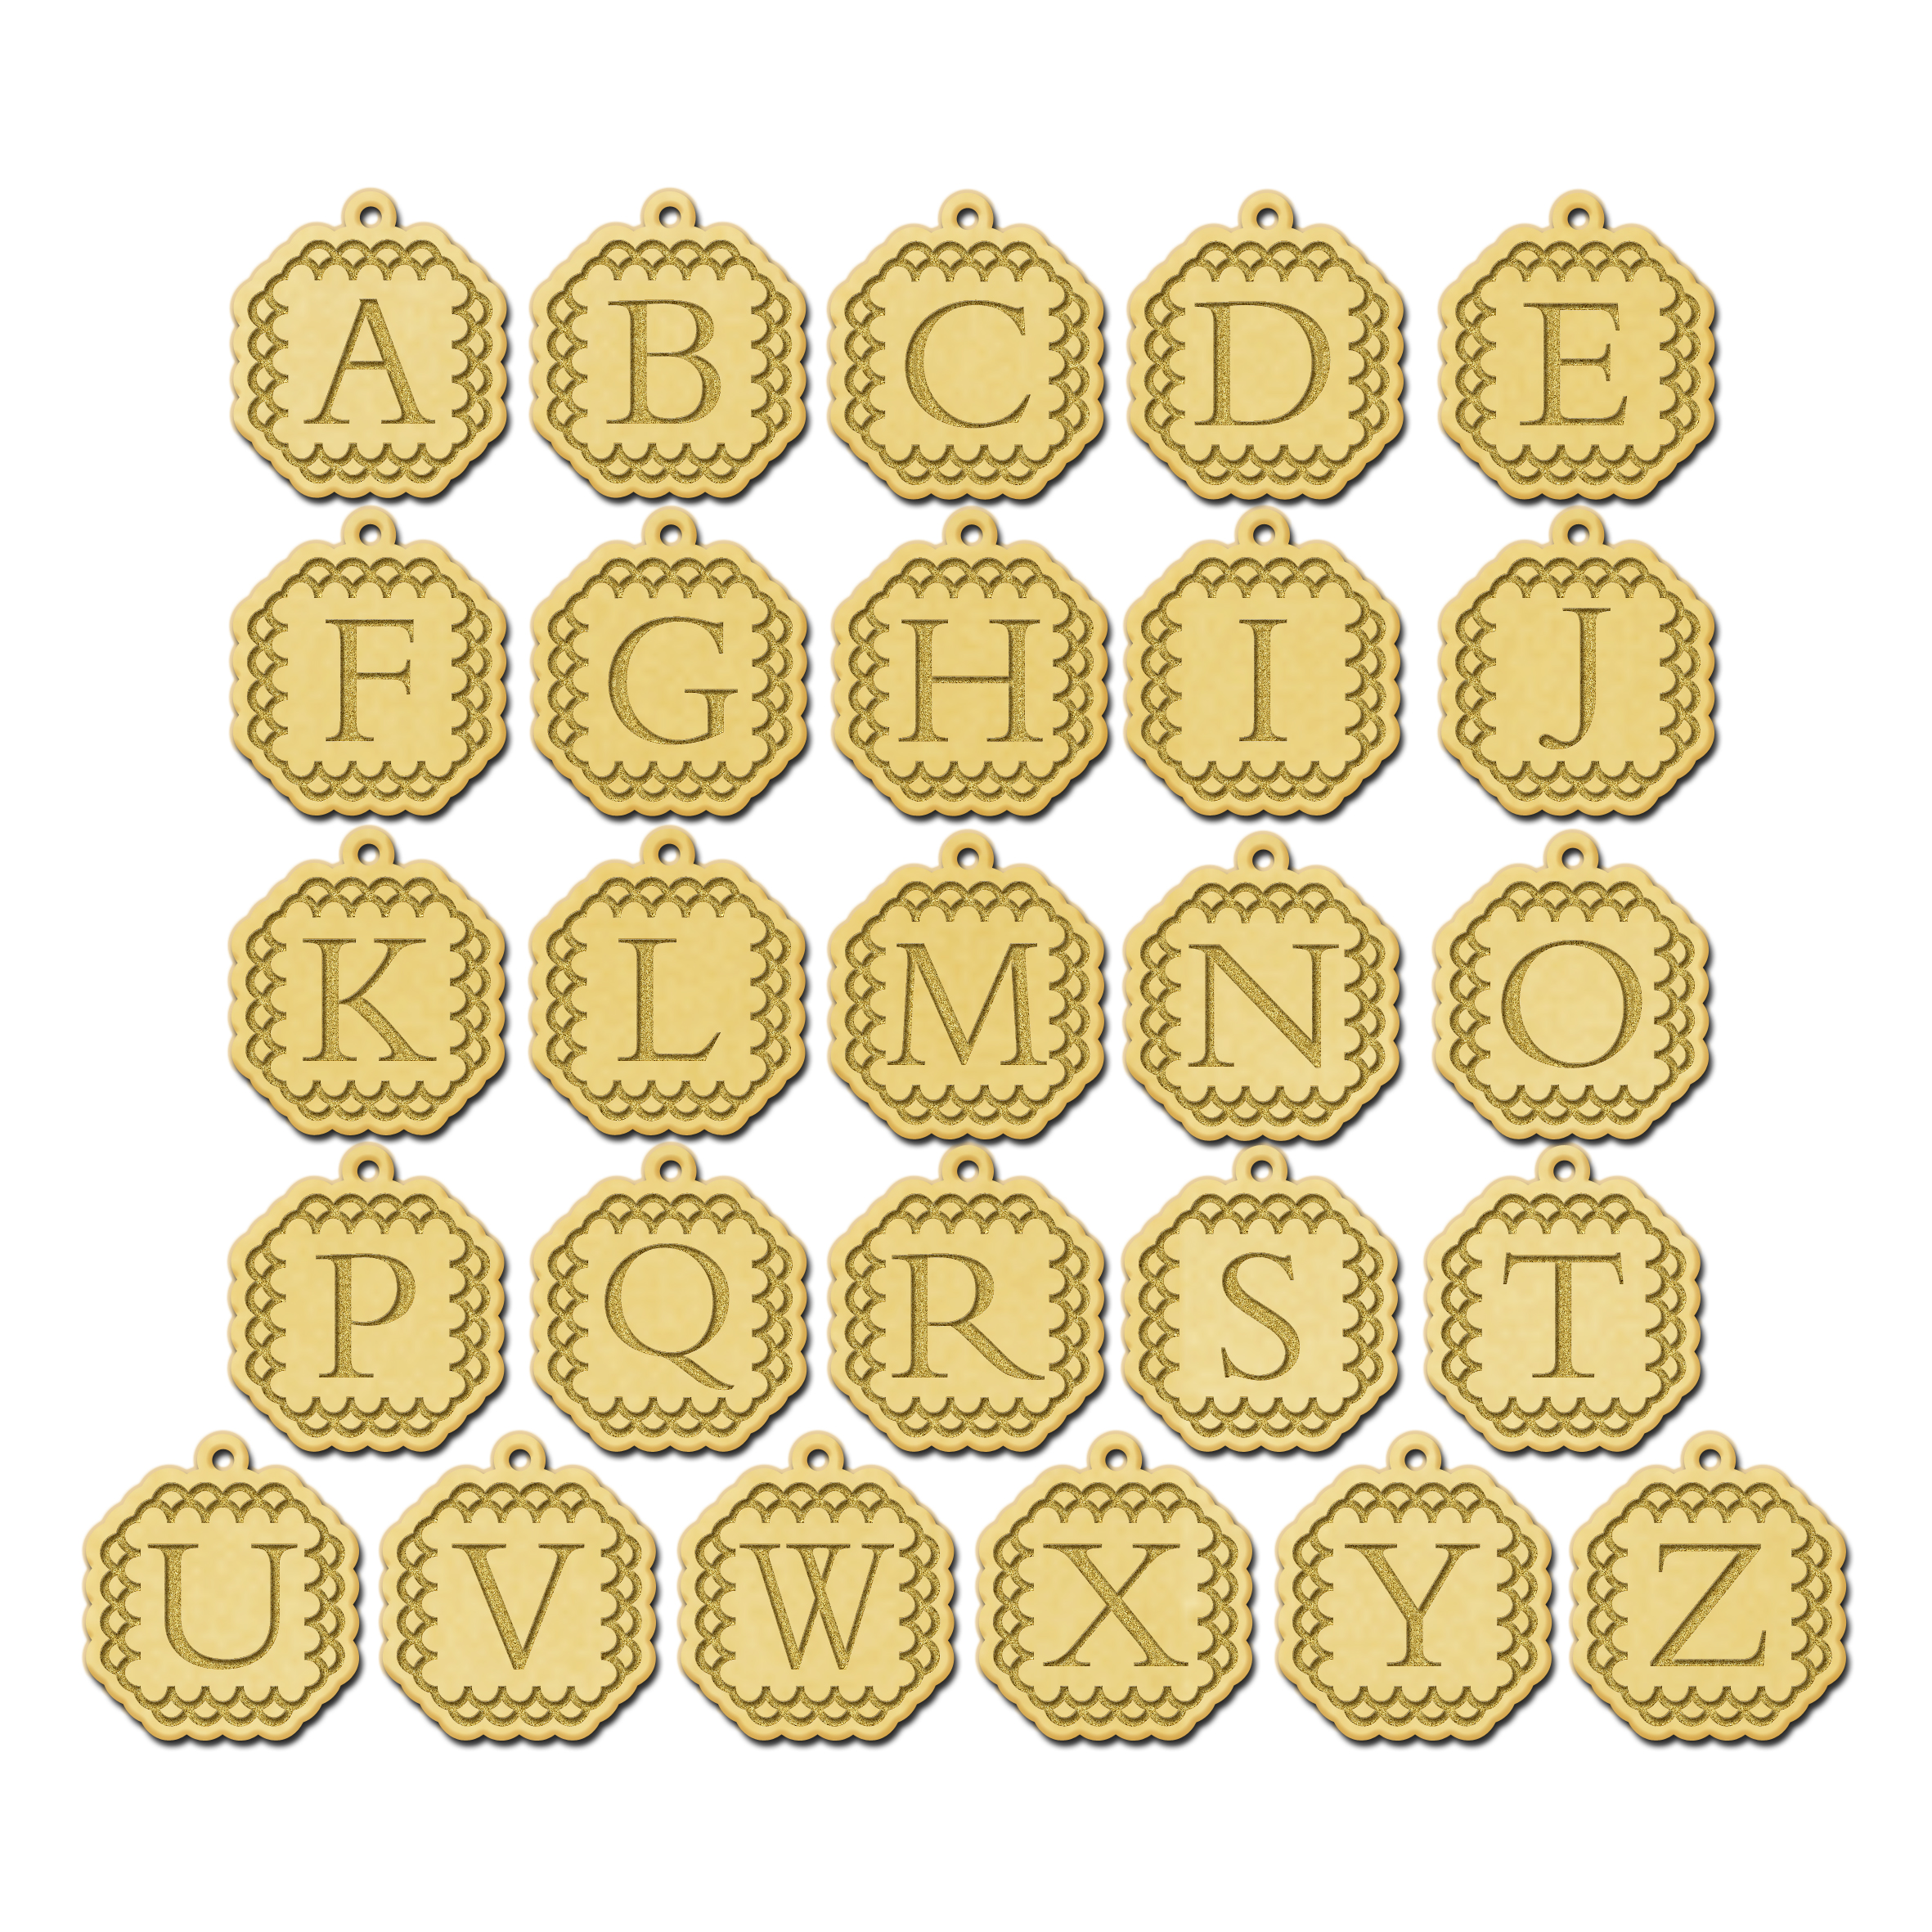 Golden initial pendant engraved border